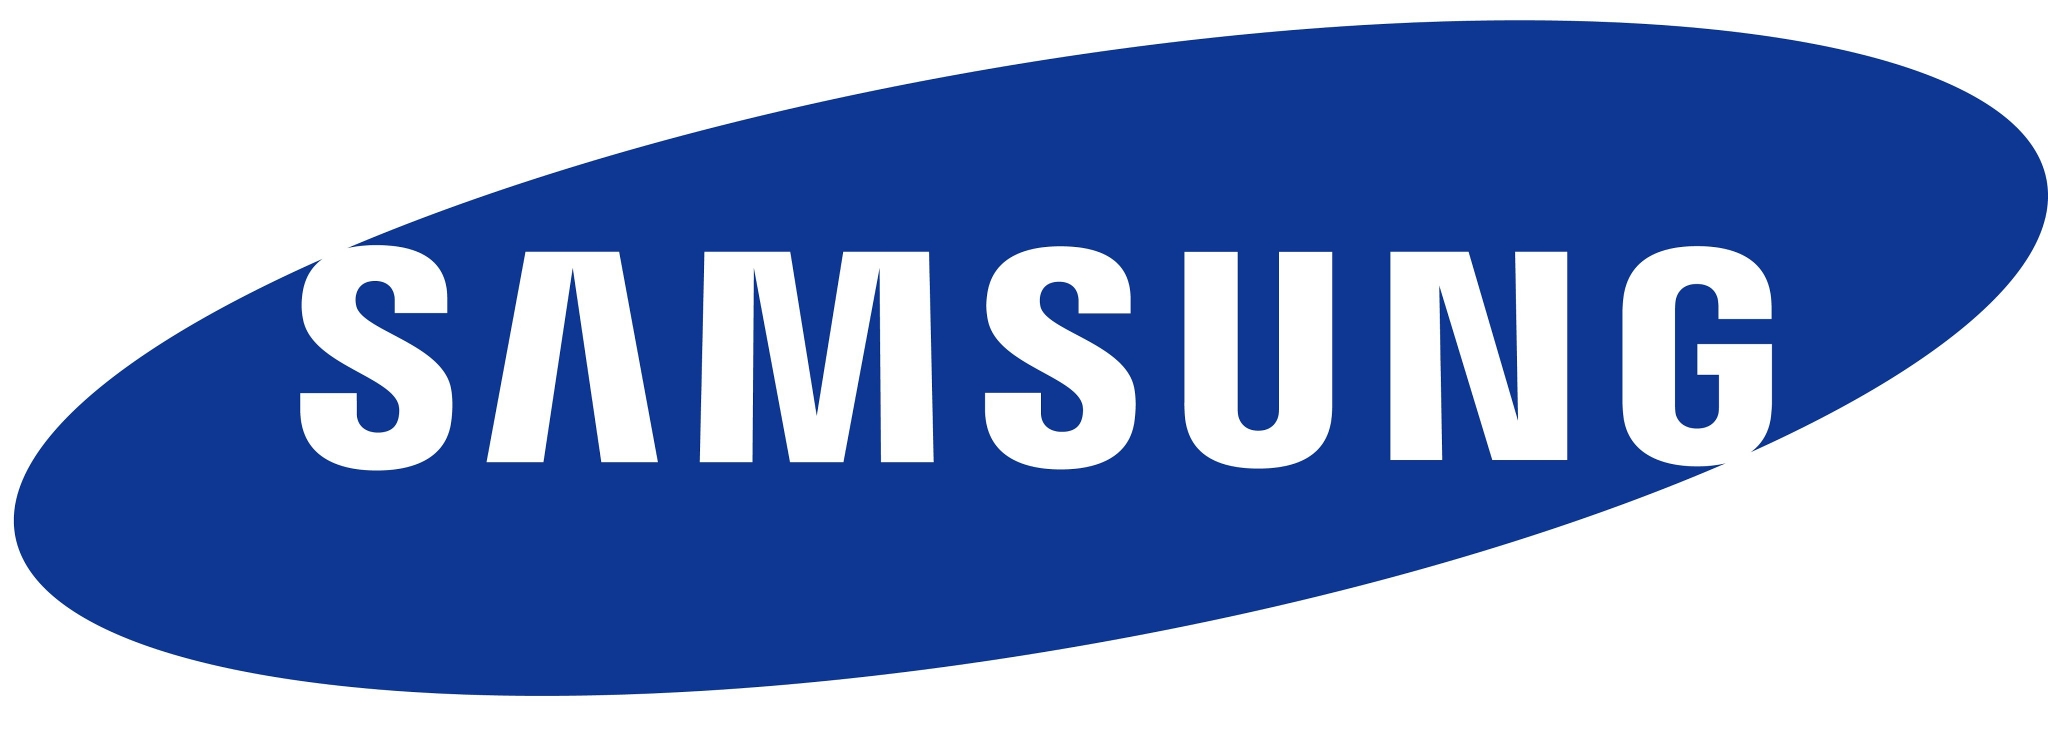 Image result for samsung galaxy logo